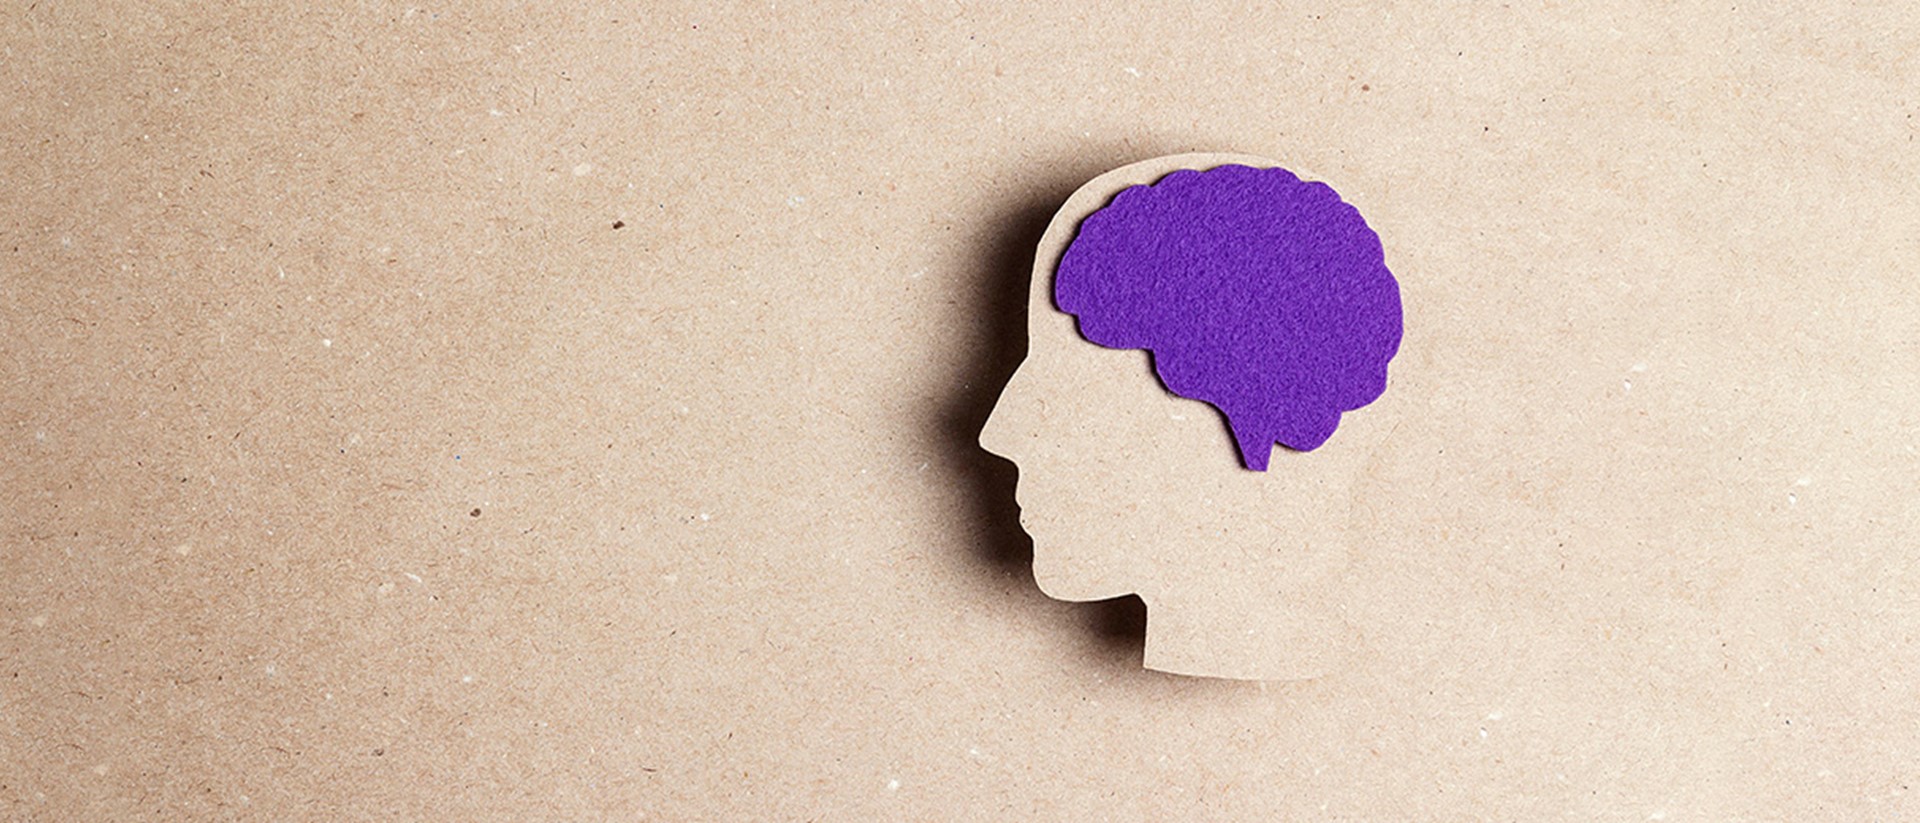 Image of a purple brain on sand